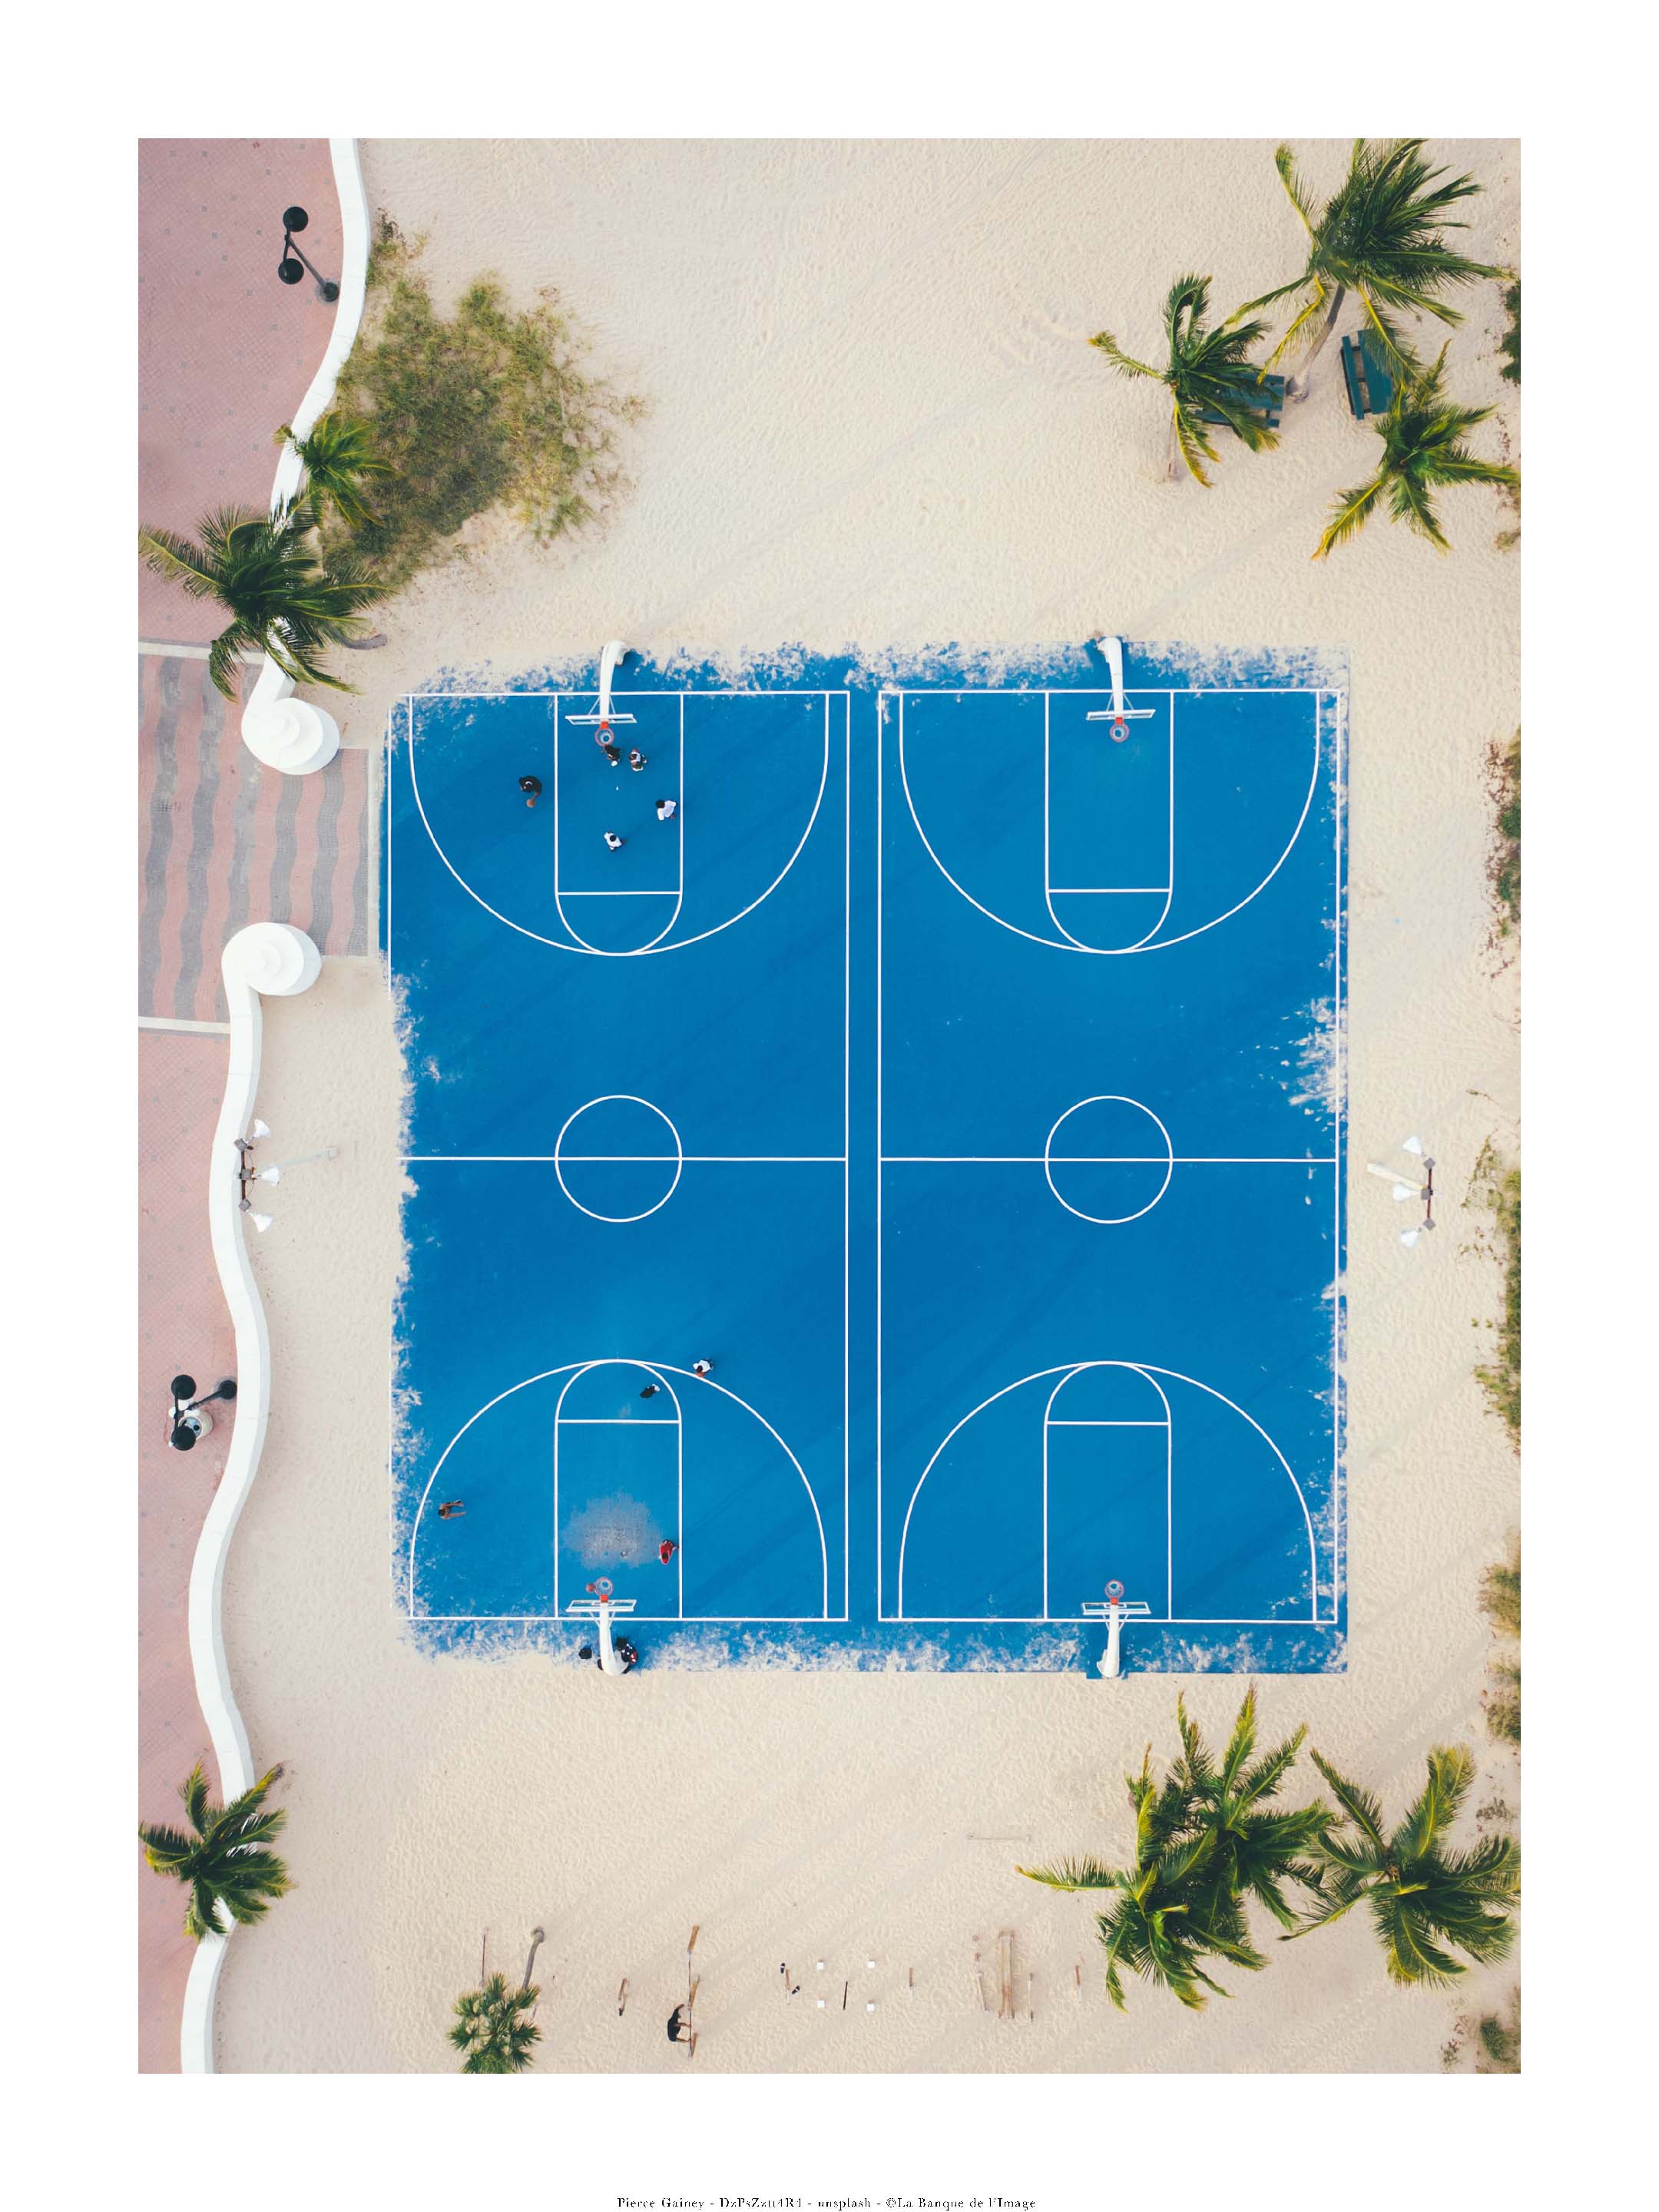 Terrain de basket